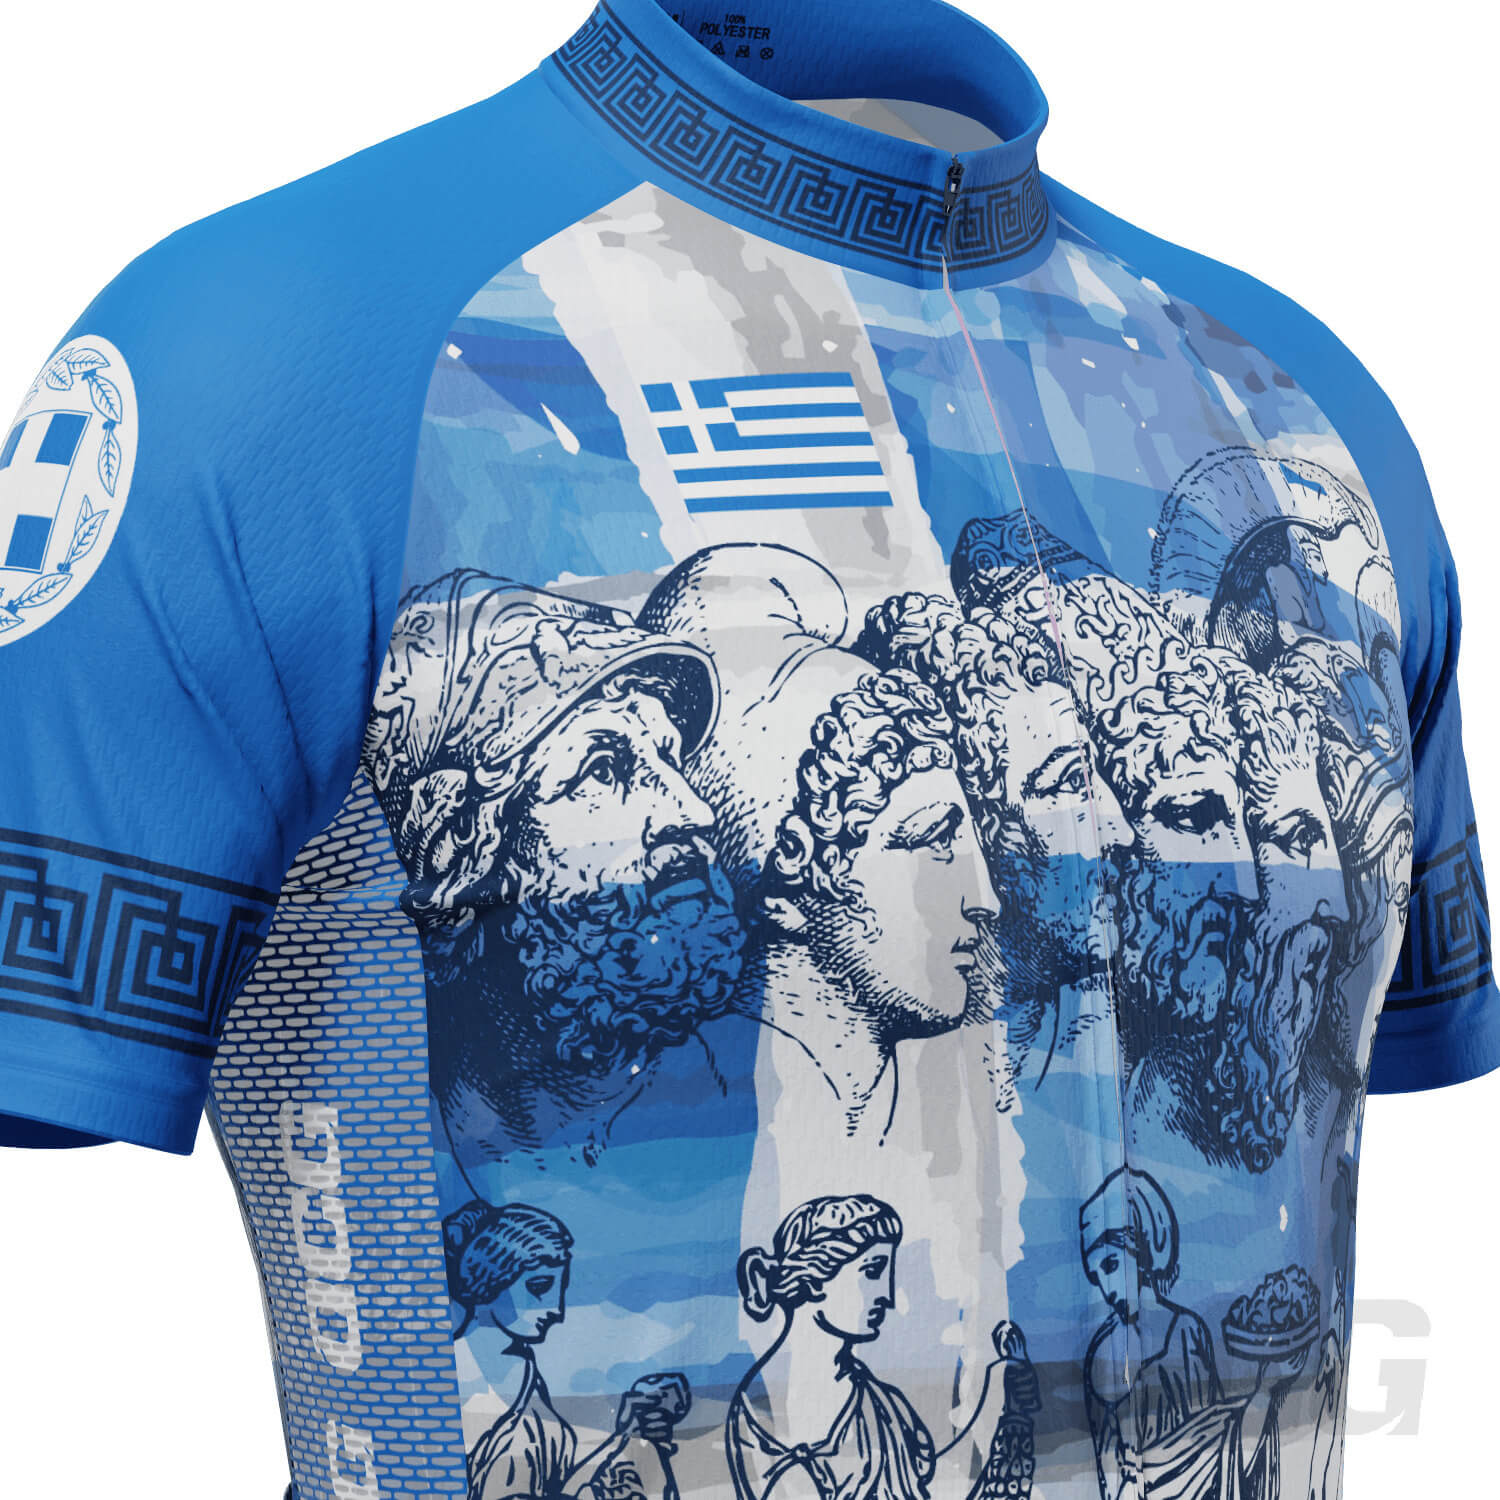 Men's Ancient Greece Short Sleeve Cycling Jersey